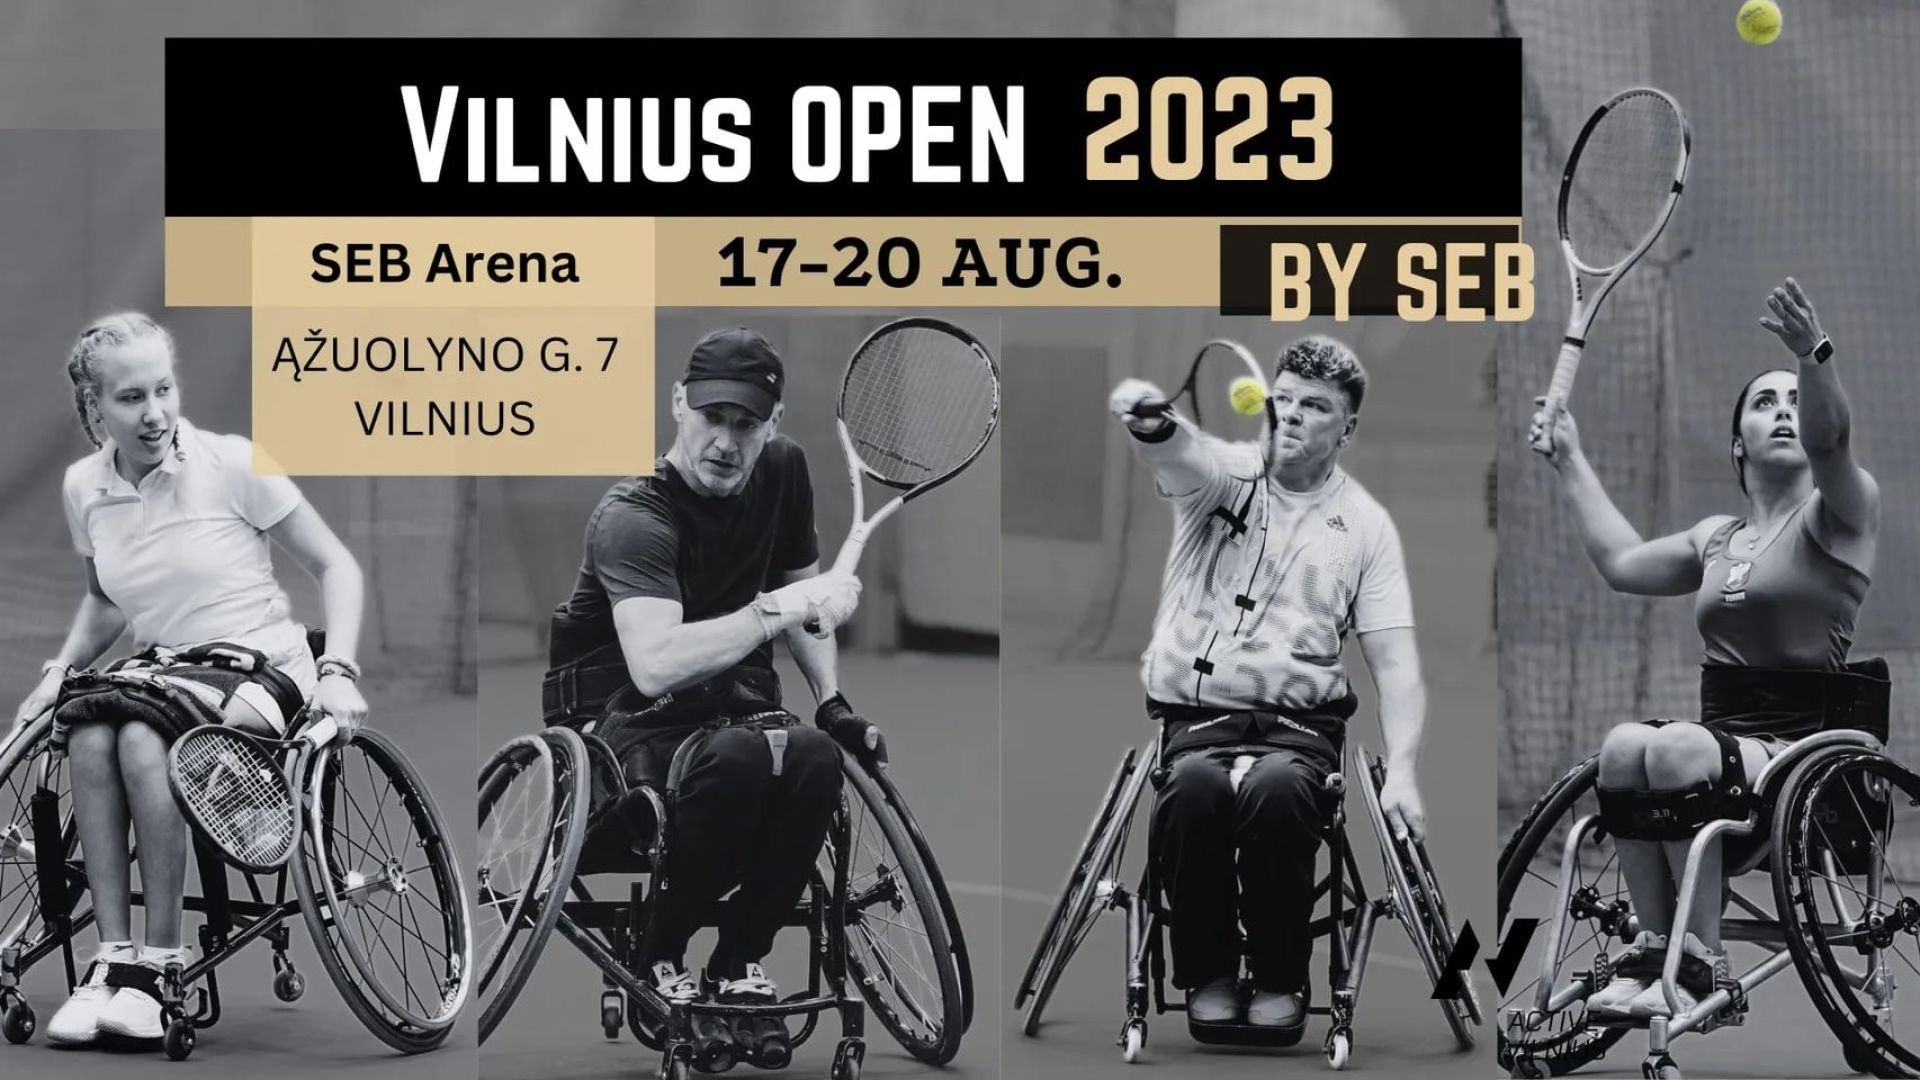 COURT 8 DAY 2 - VILNIIUS OPEN 2023 BY SEB